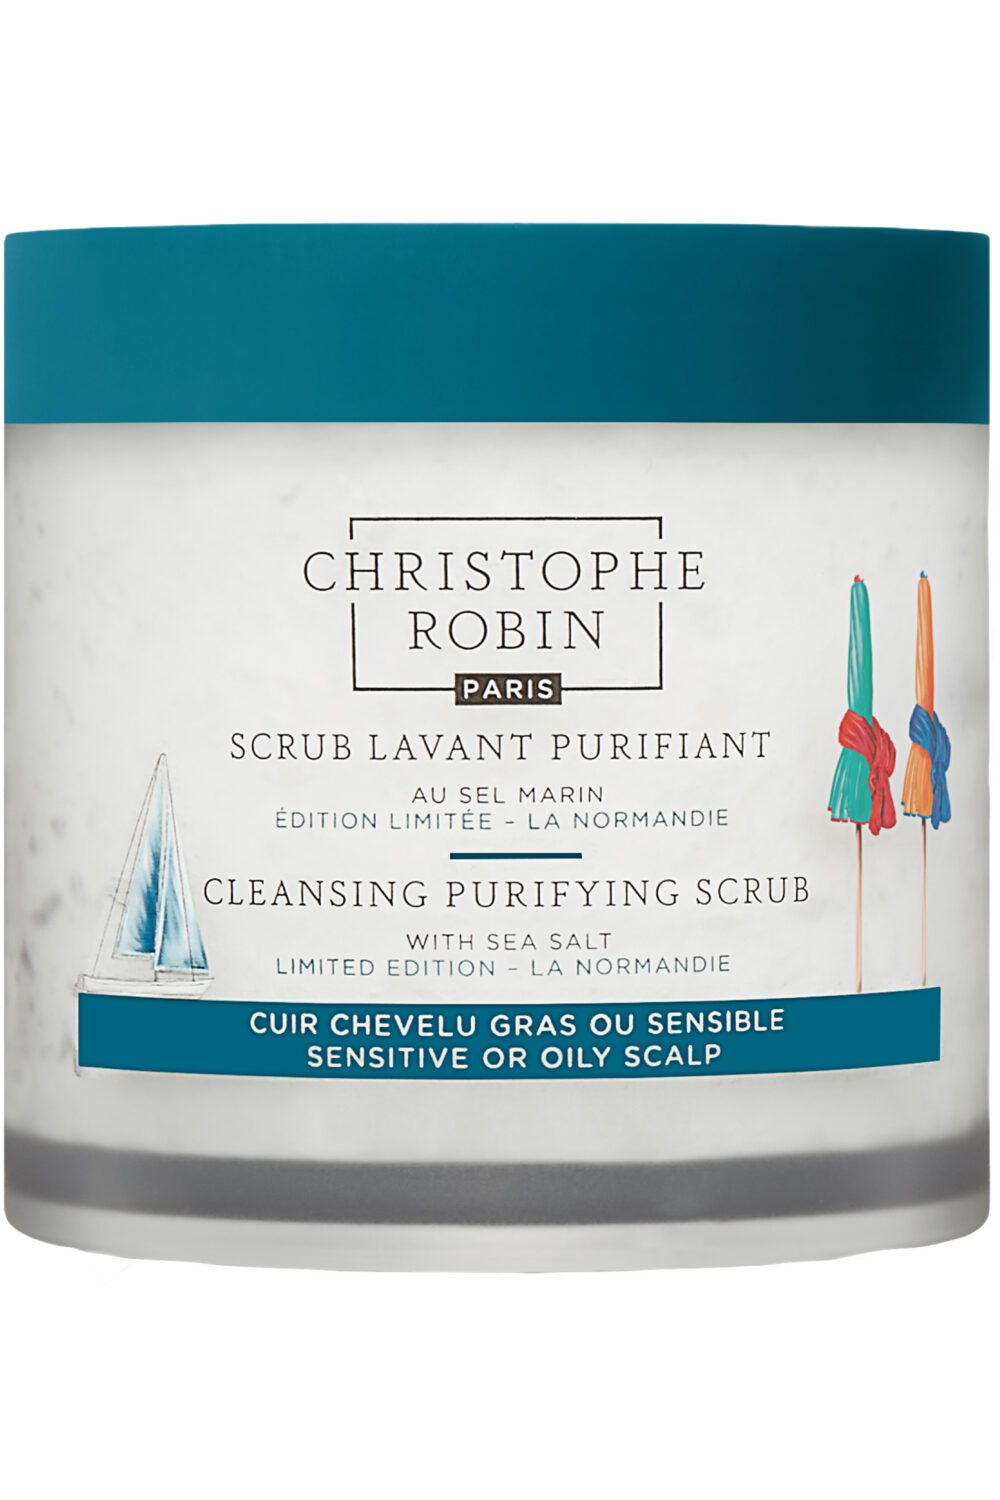 Christophe Robin - Shampooing scrub lavant purifiant au sel marin 250 ml édition limitée